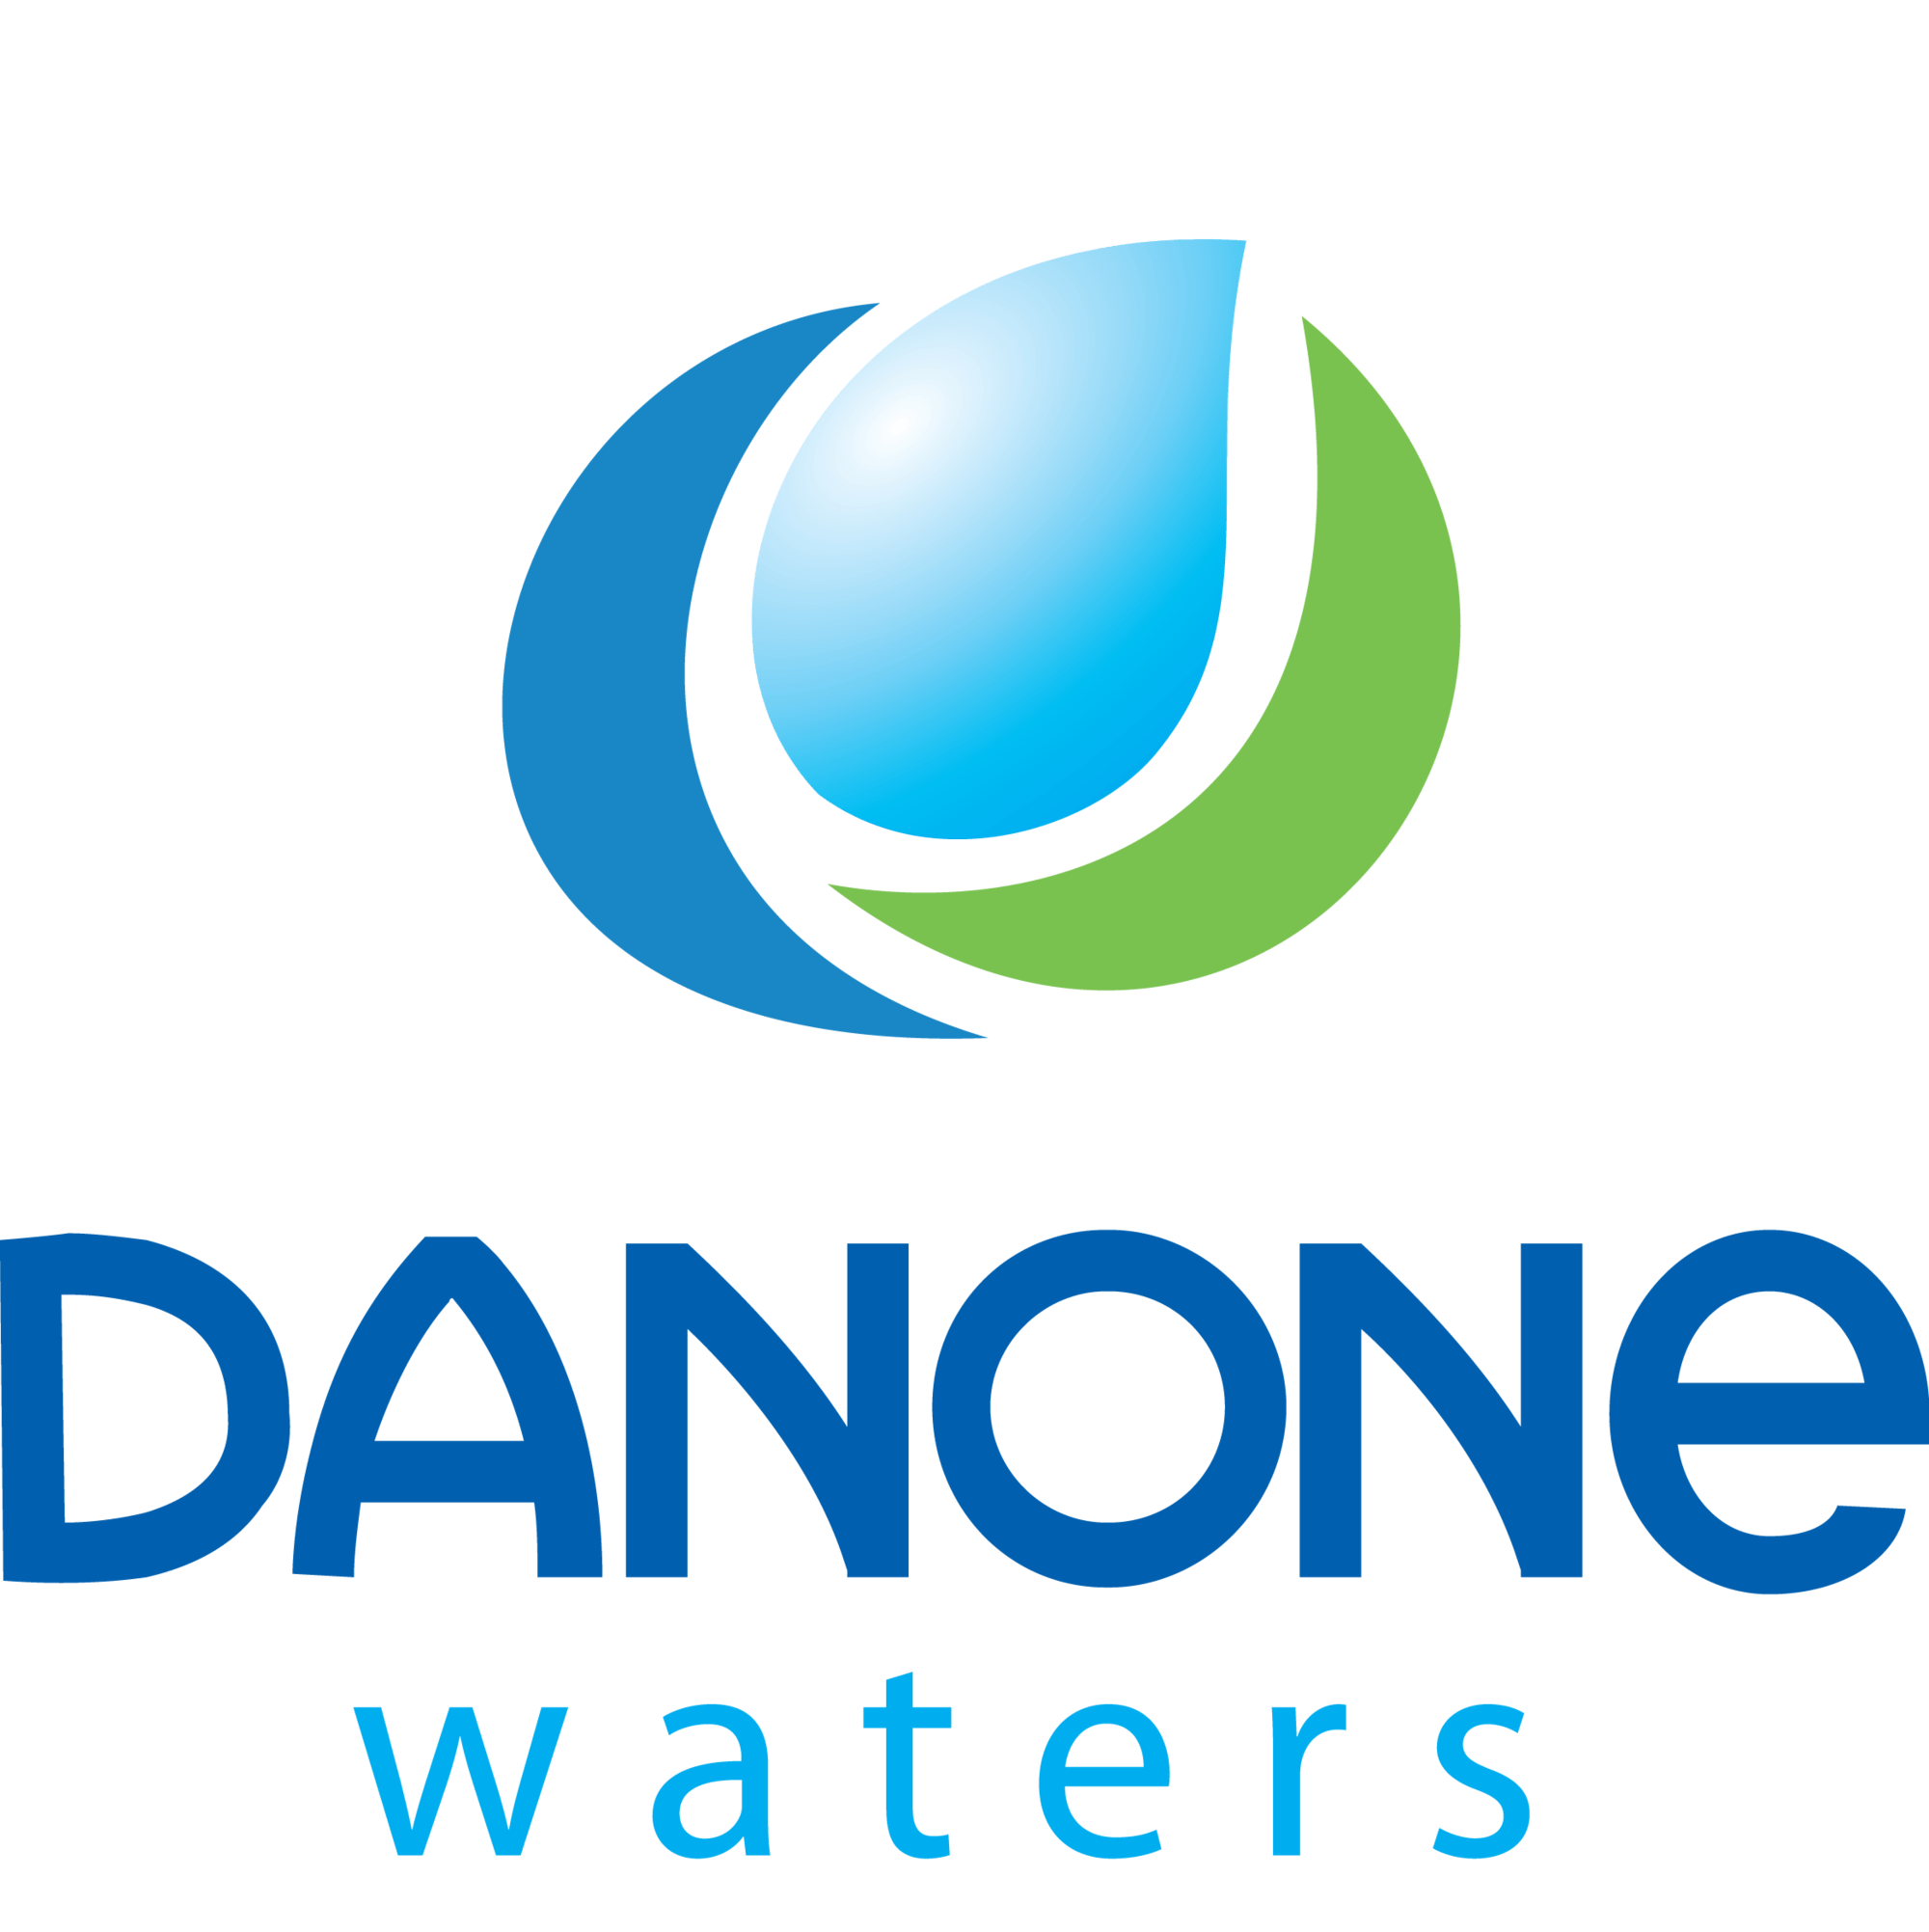 Waters Logo - Danone Waters | Logopedia | FANDOM powered by Wikia